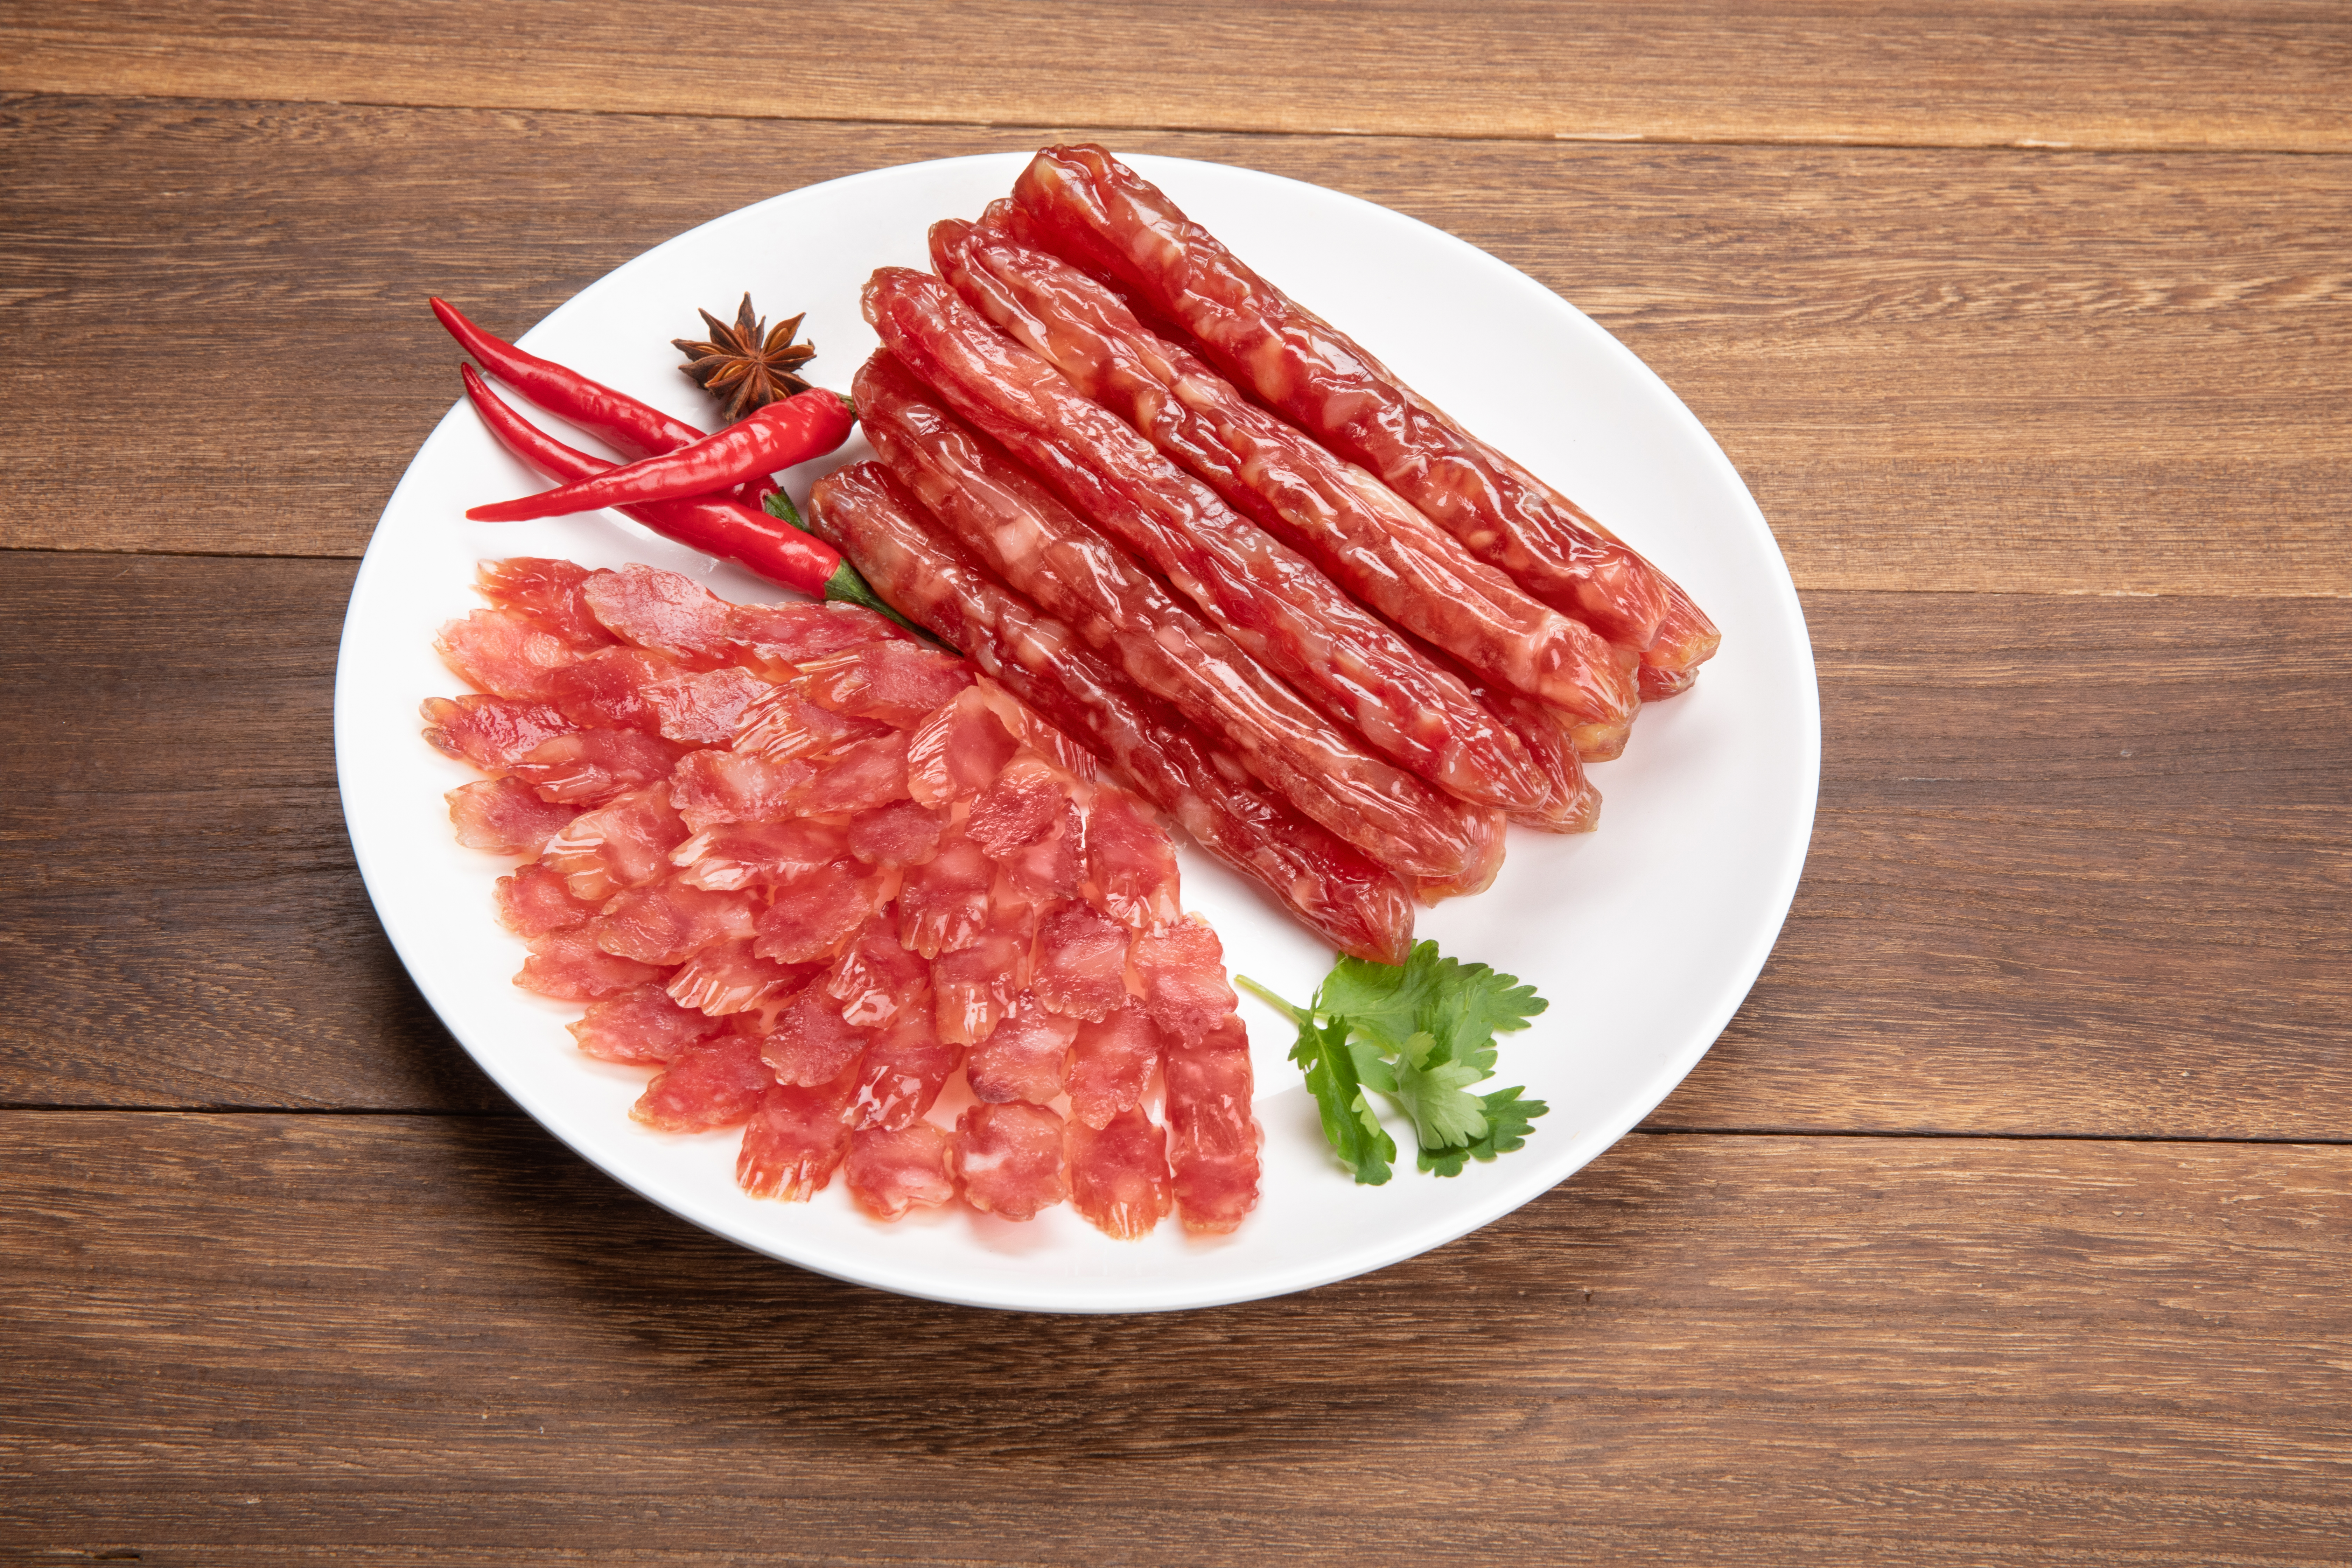 Cantonese cut sausage